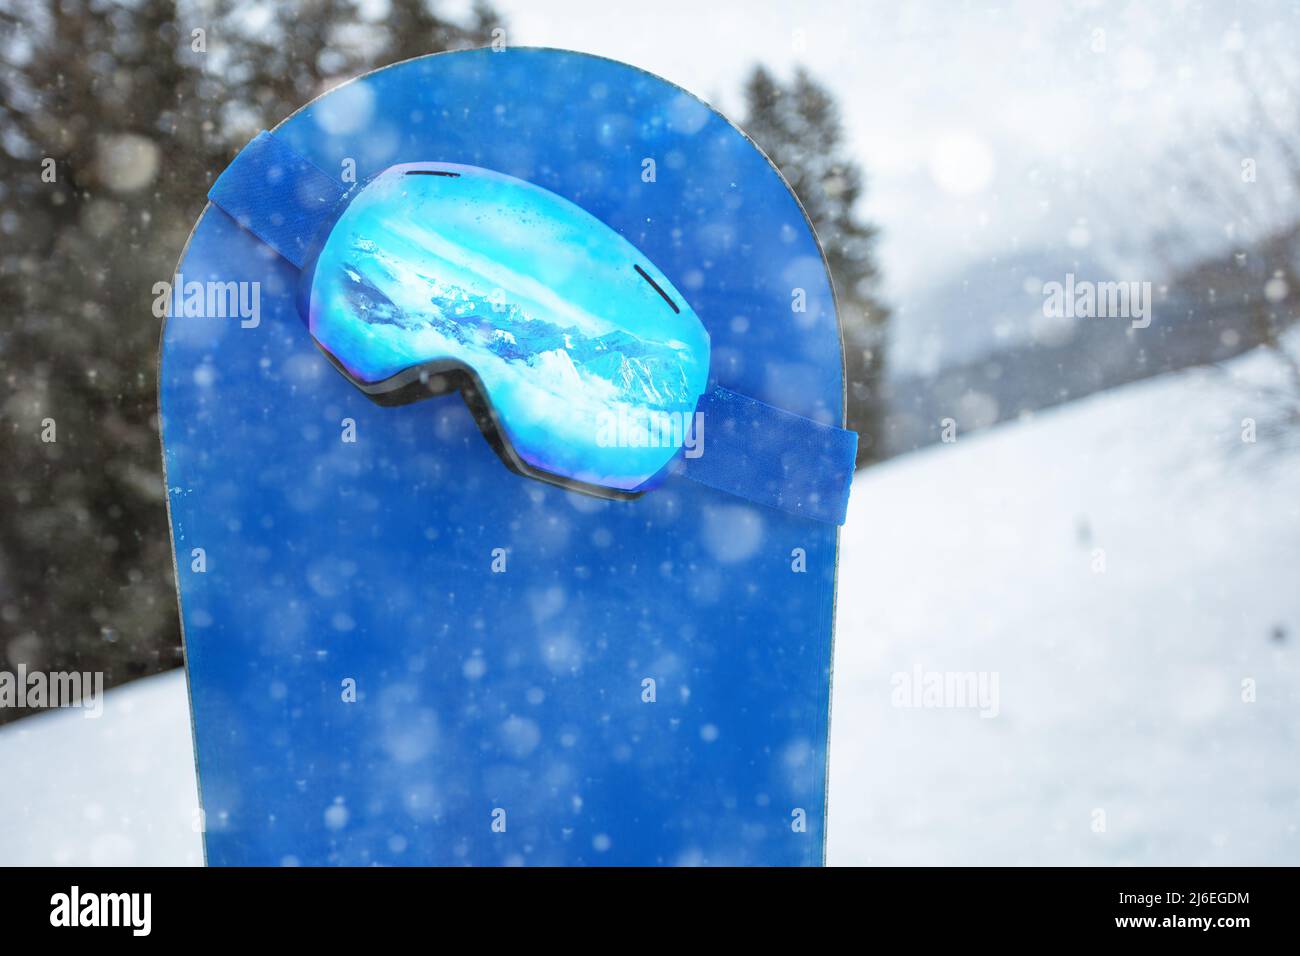 Alpine ski mask on the blue snowboard during snowfall Stock Photo